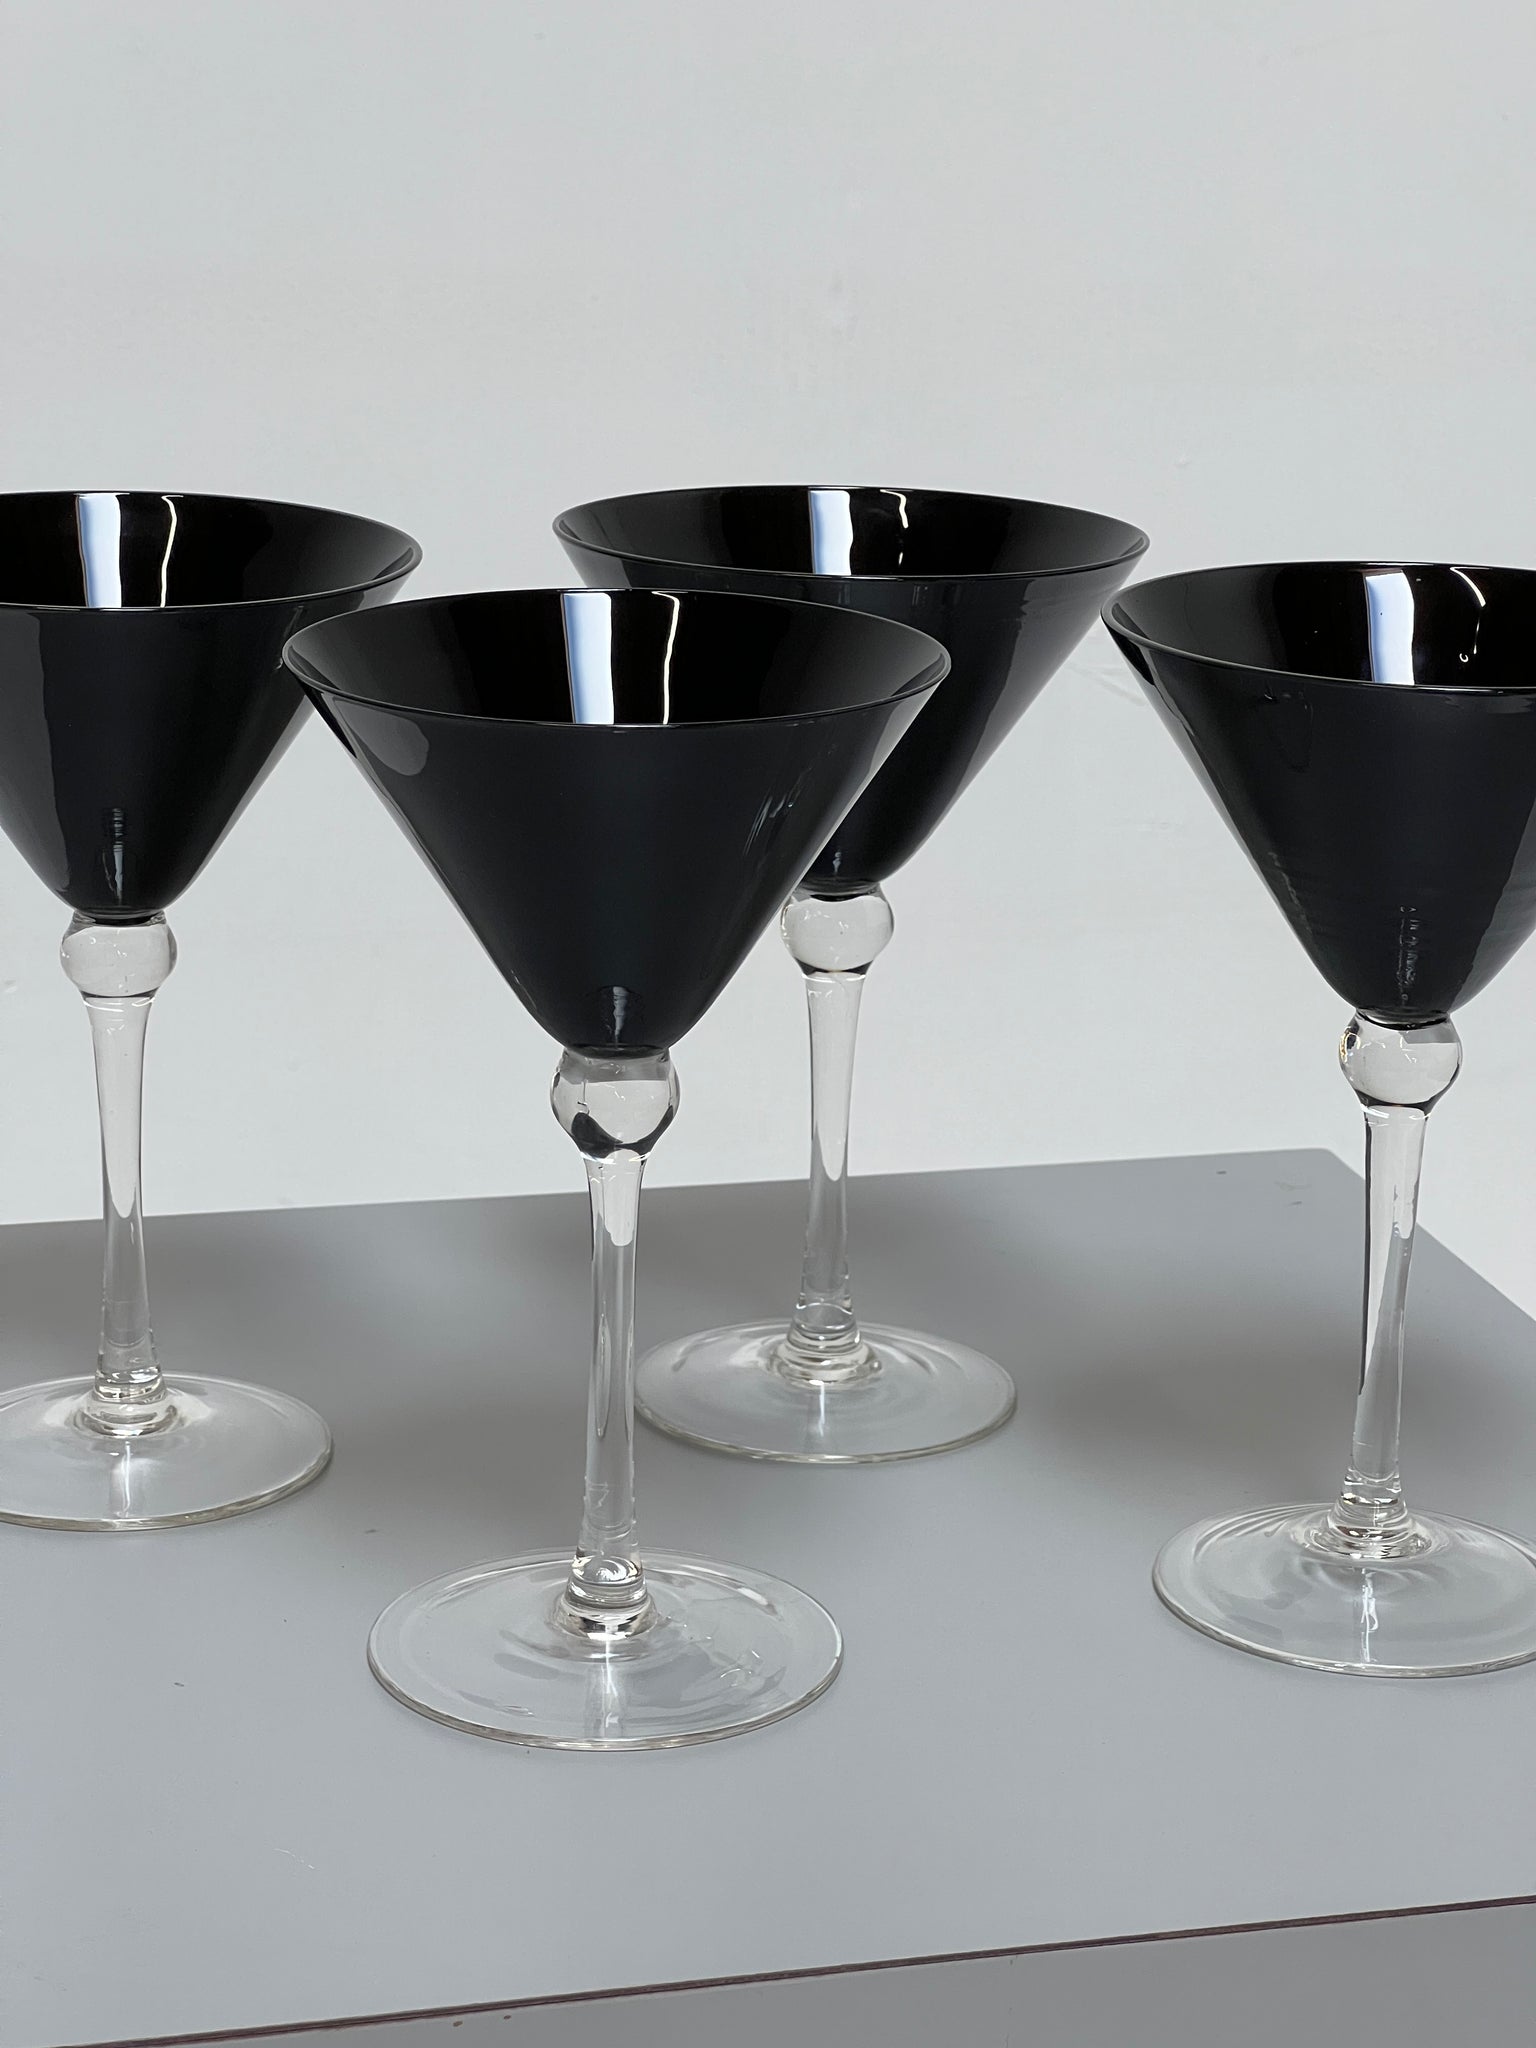 Black Martini Glasses